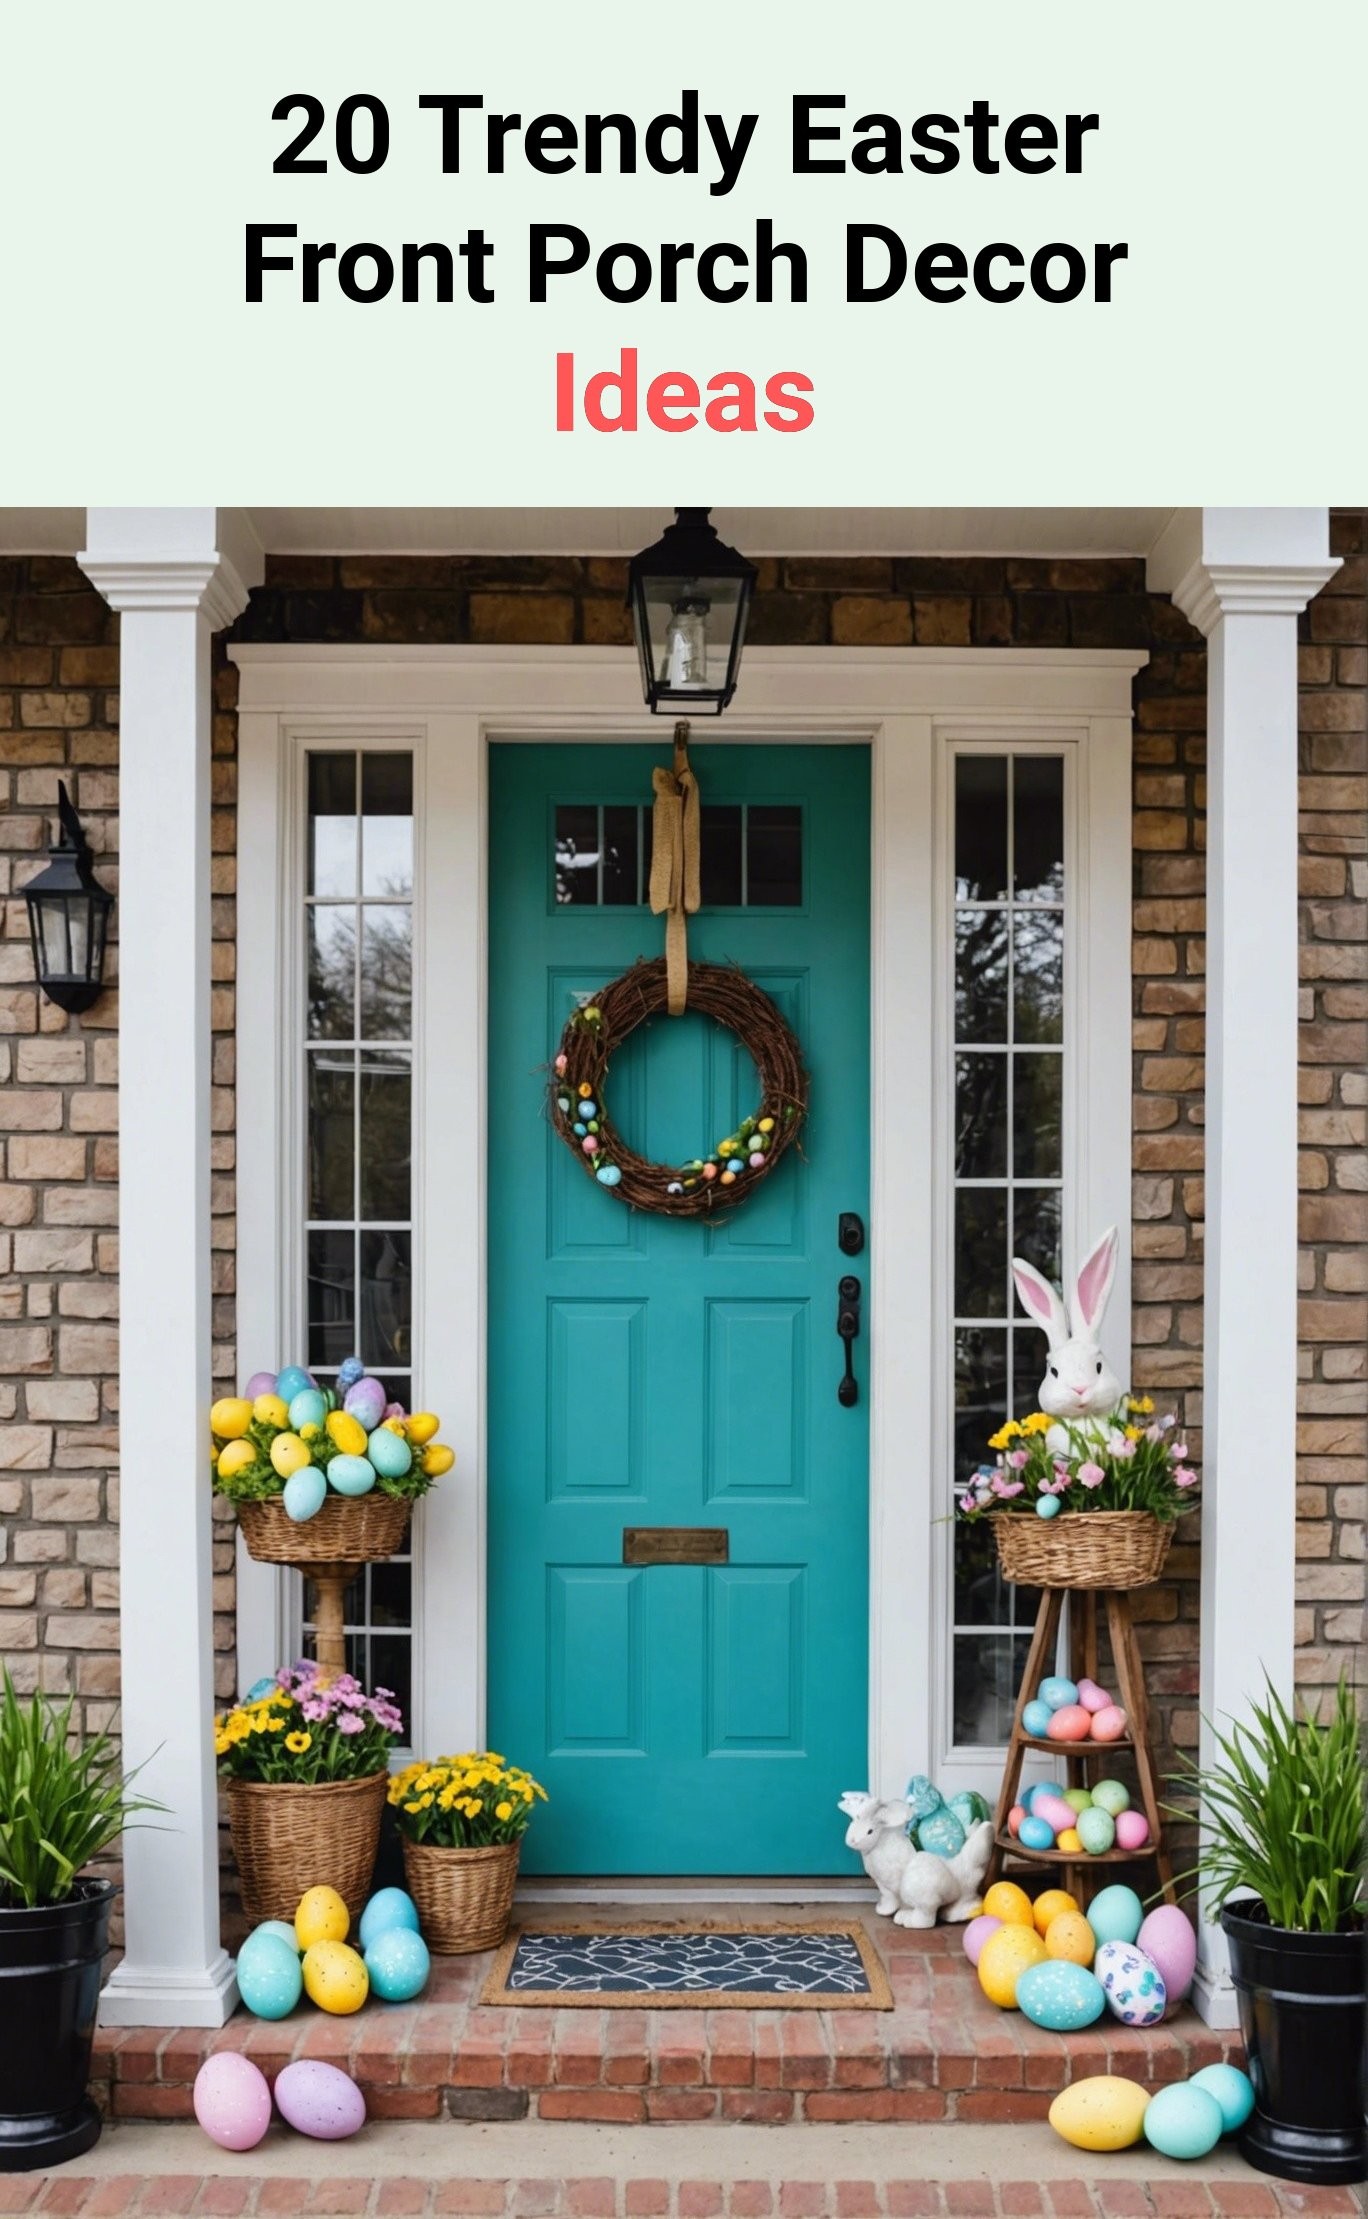 20 Trendy Easter Front Porch Decor Ideas